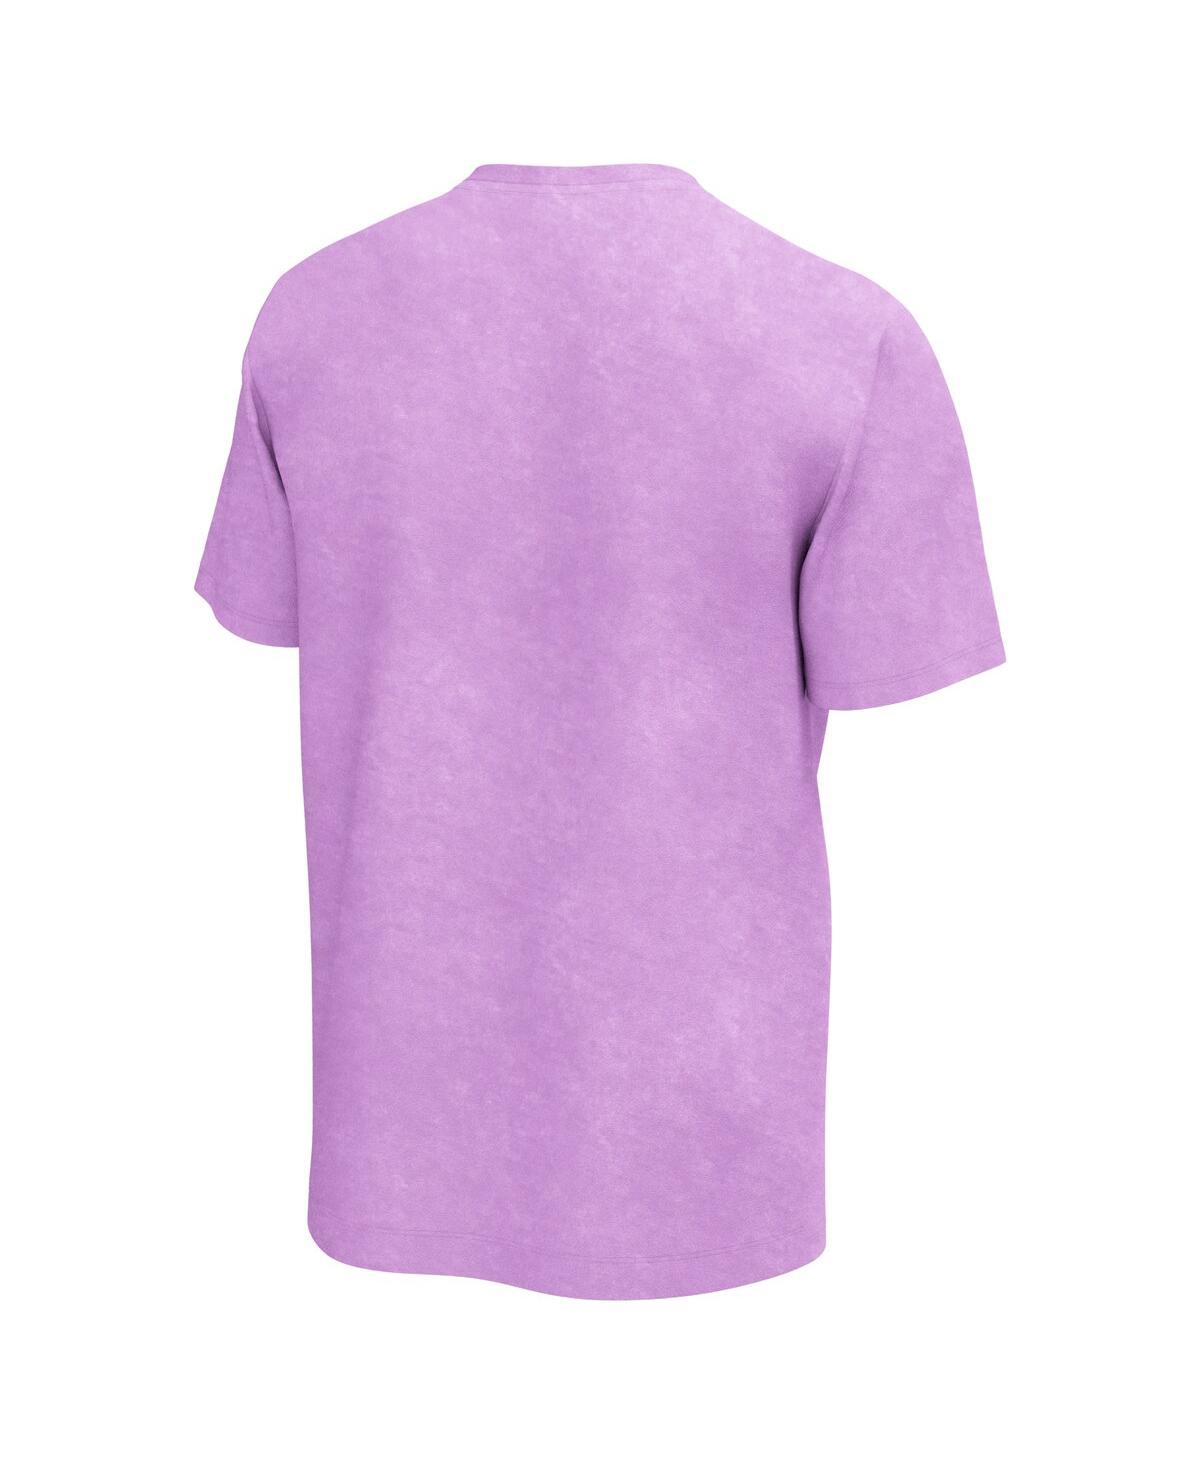 Shop Philcos Men's Purple Betty Boop Washed Graphic T-shirt